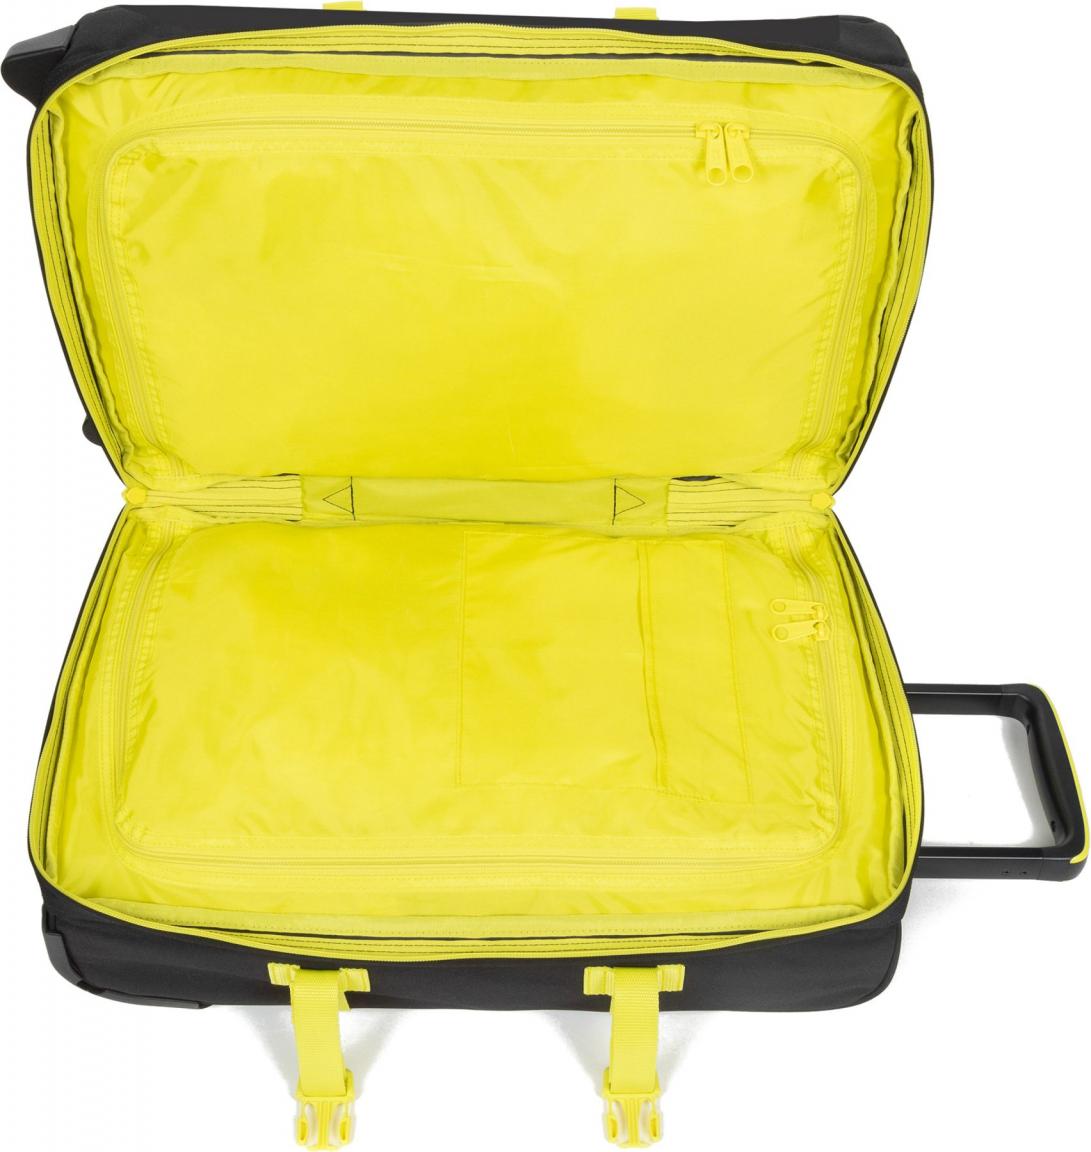 Handgepäckskoffer Eastpak Tranverz S Kontrast Grade Lime Gelb